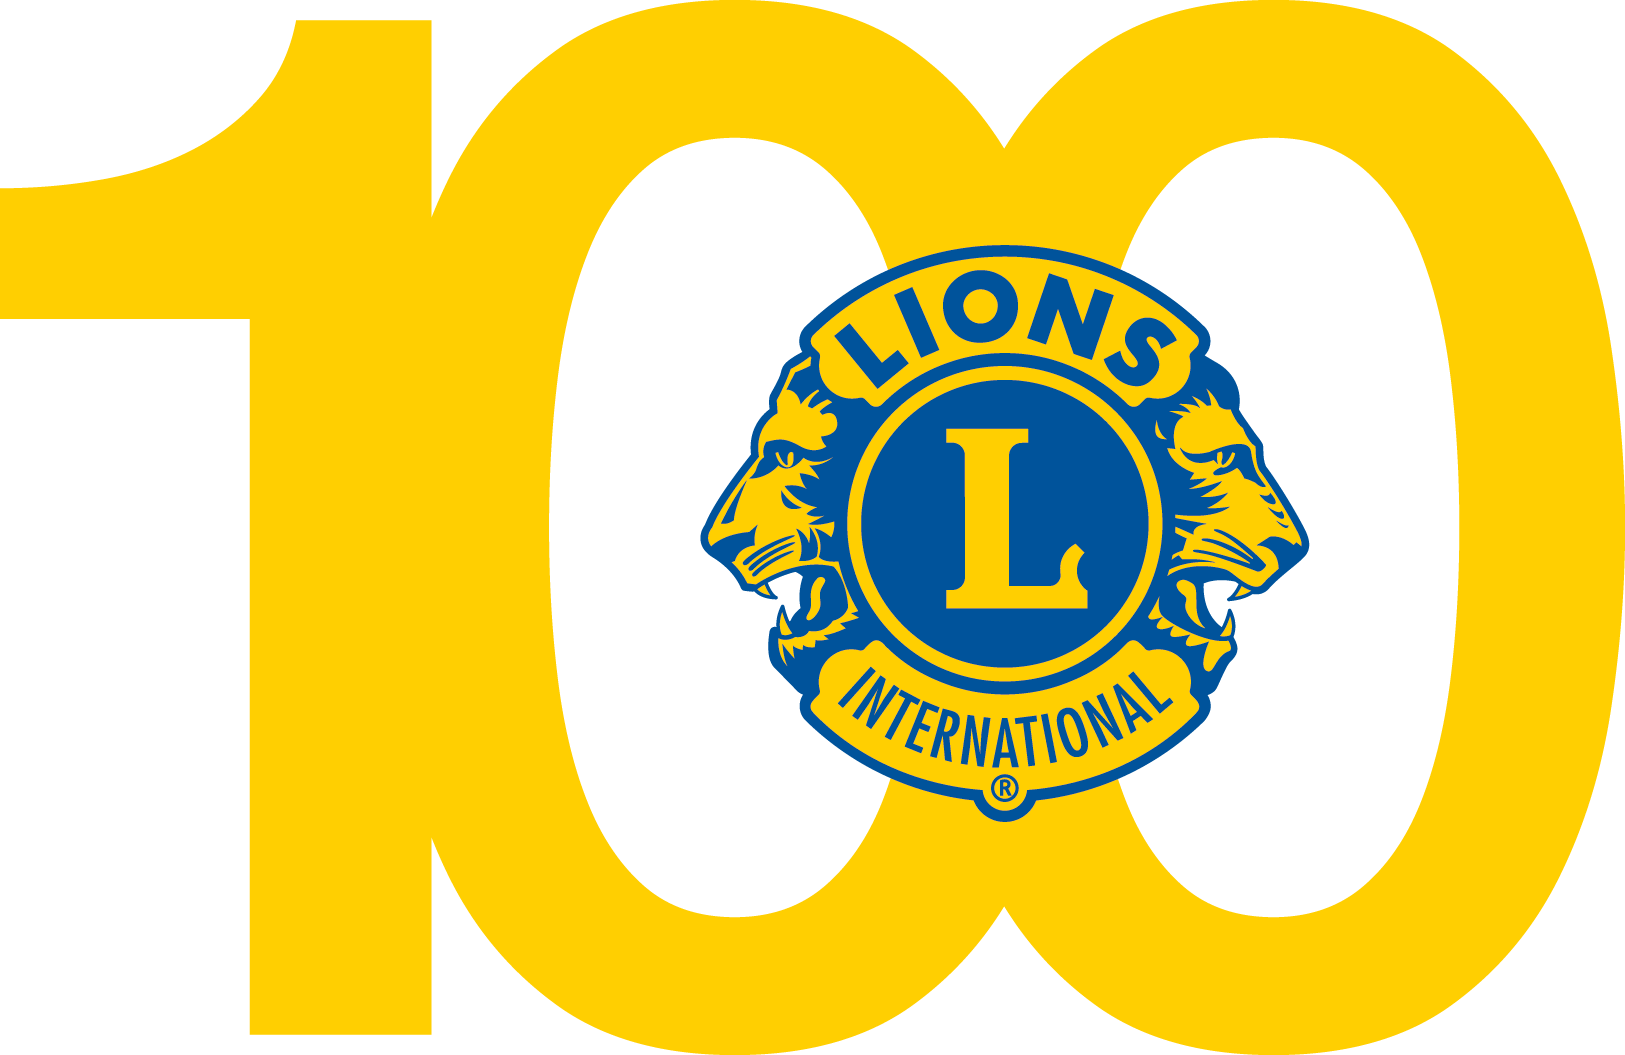 Lions Club Logo - Image result for lions club logo. Lions. Lion, Lions clubs